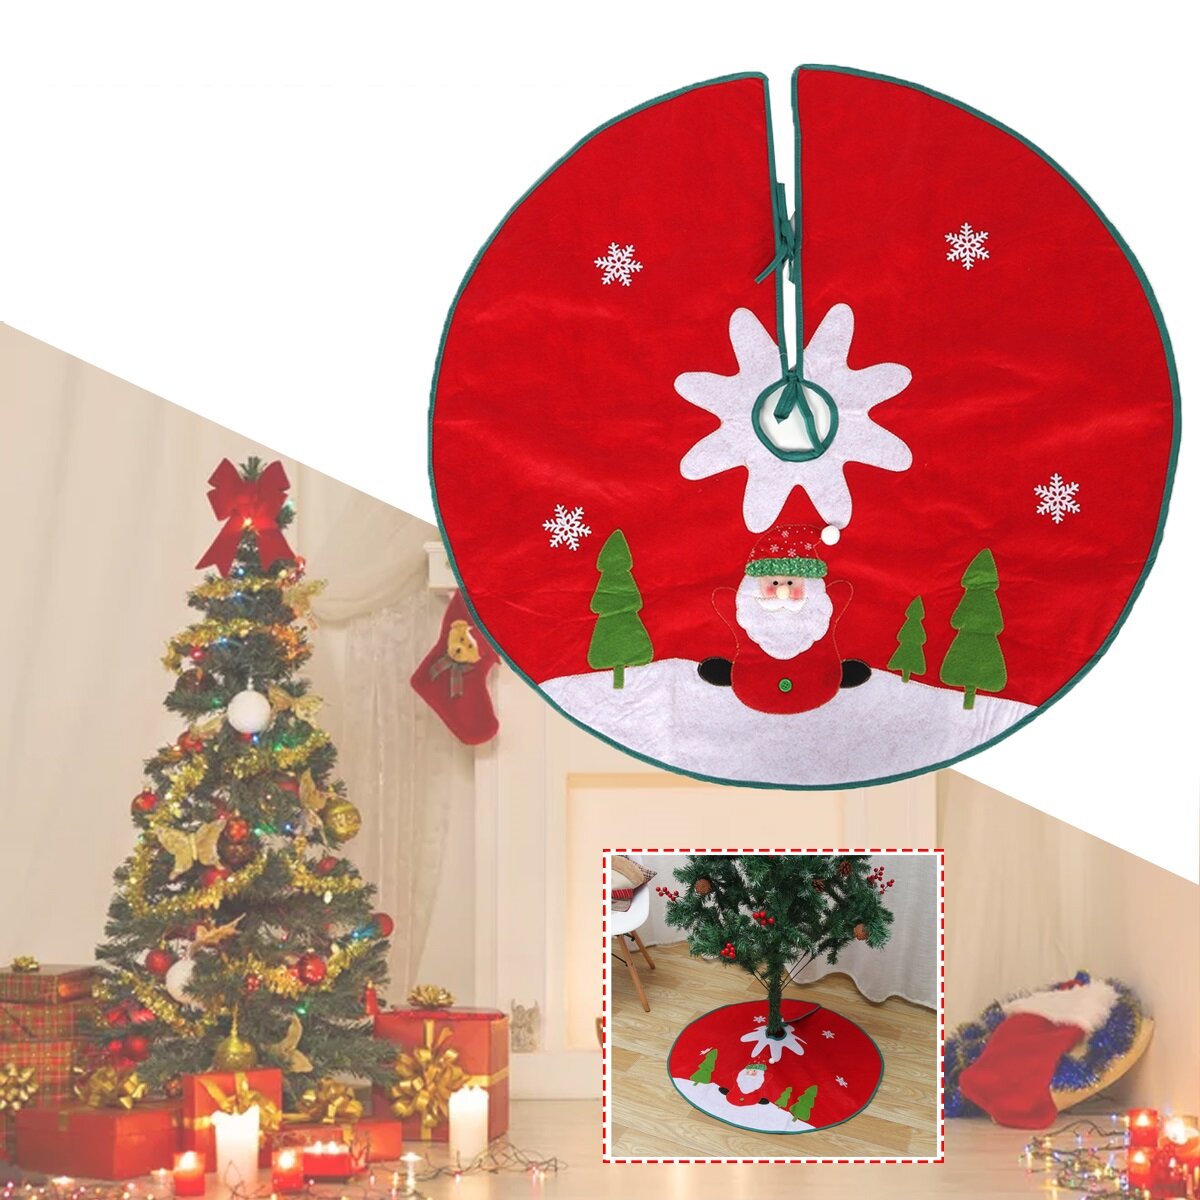 2020 Christmas Decor Santa Claus Christmas Tree Skirt Aprons New Year Xmas Tree Carpet Foot Cover for Home Decoration